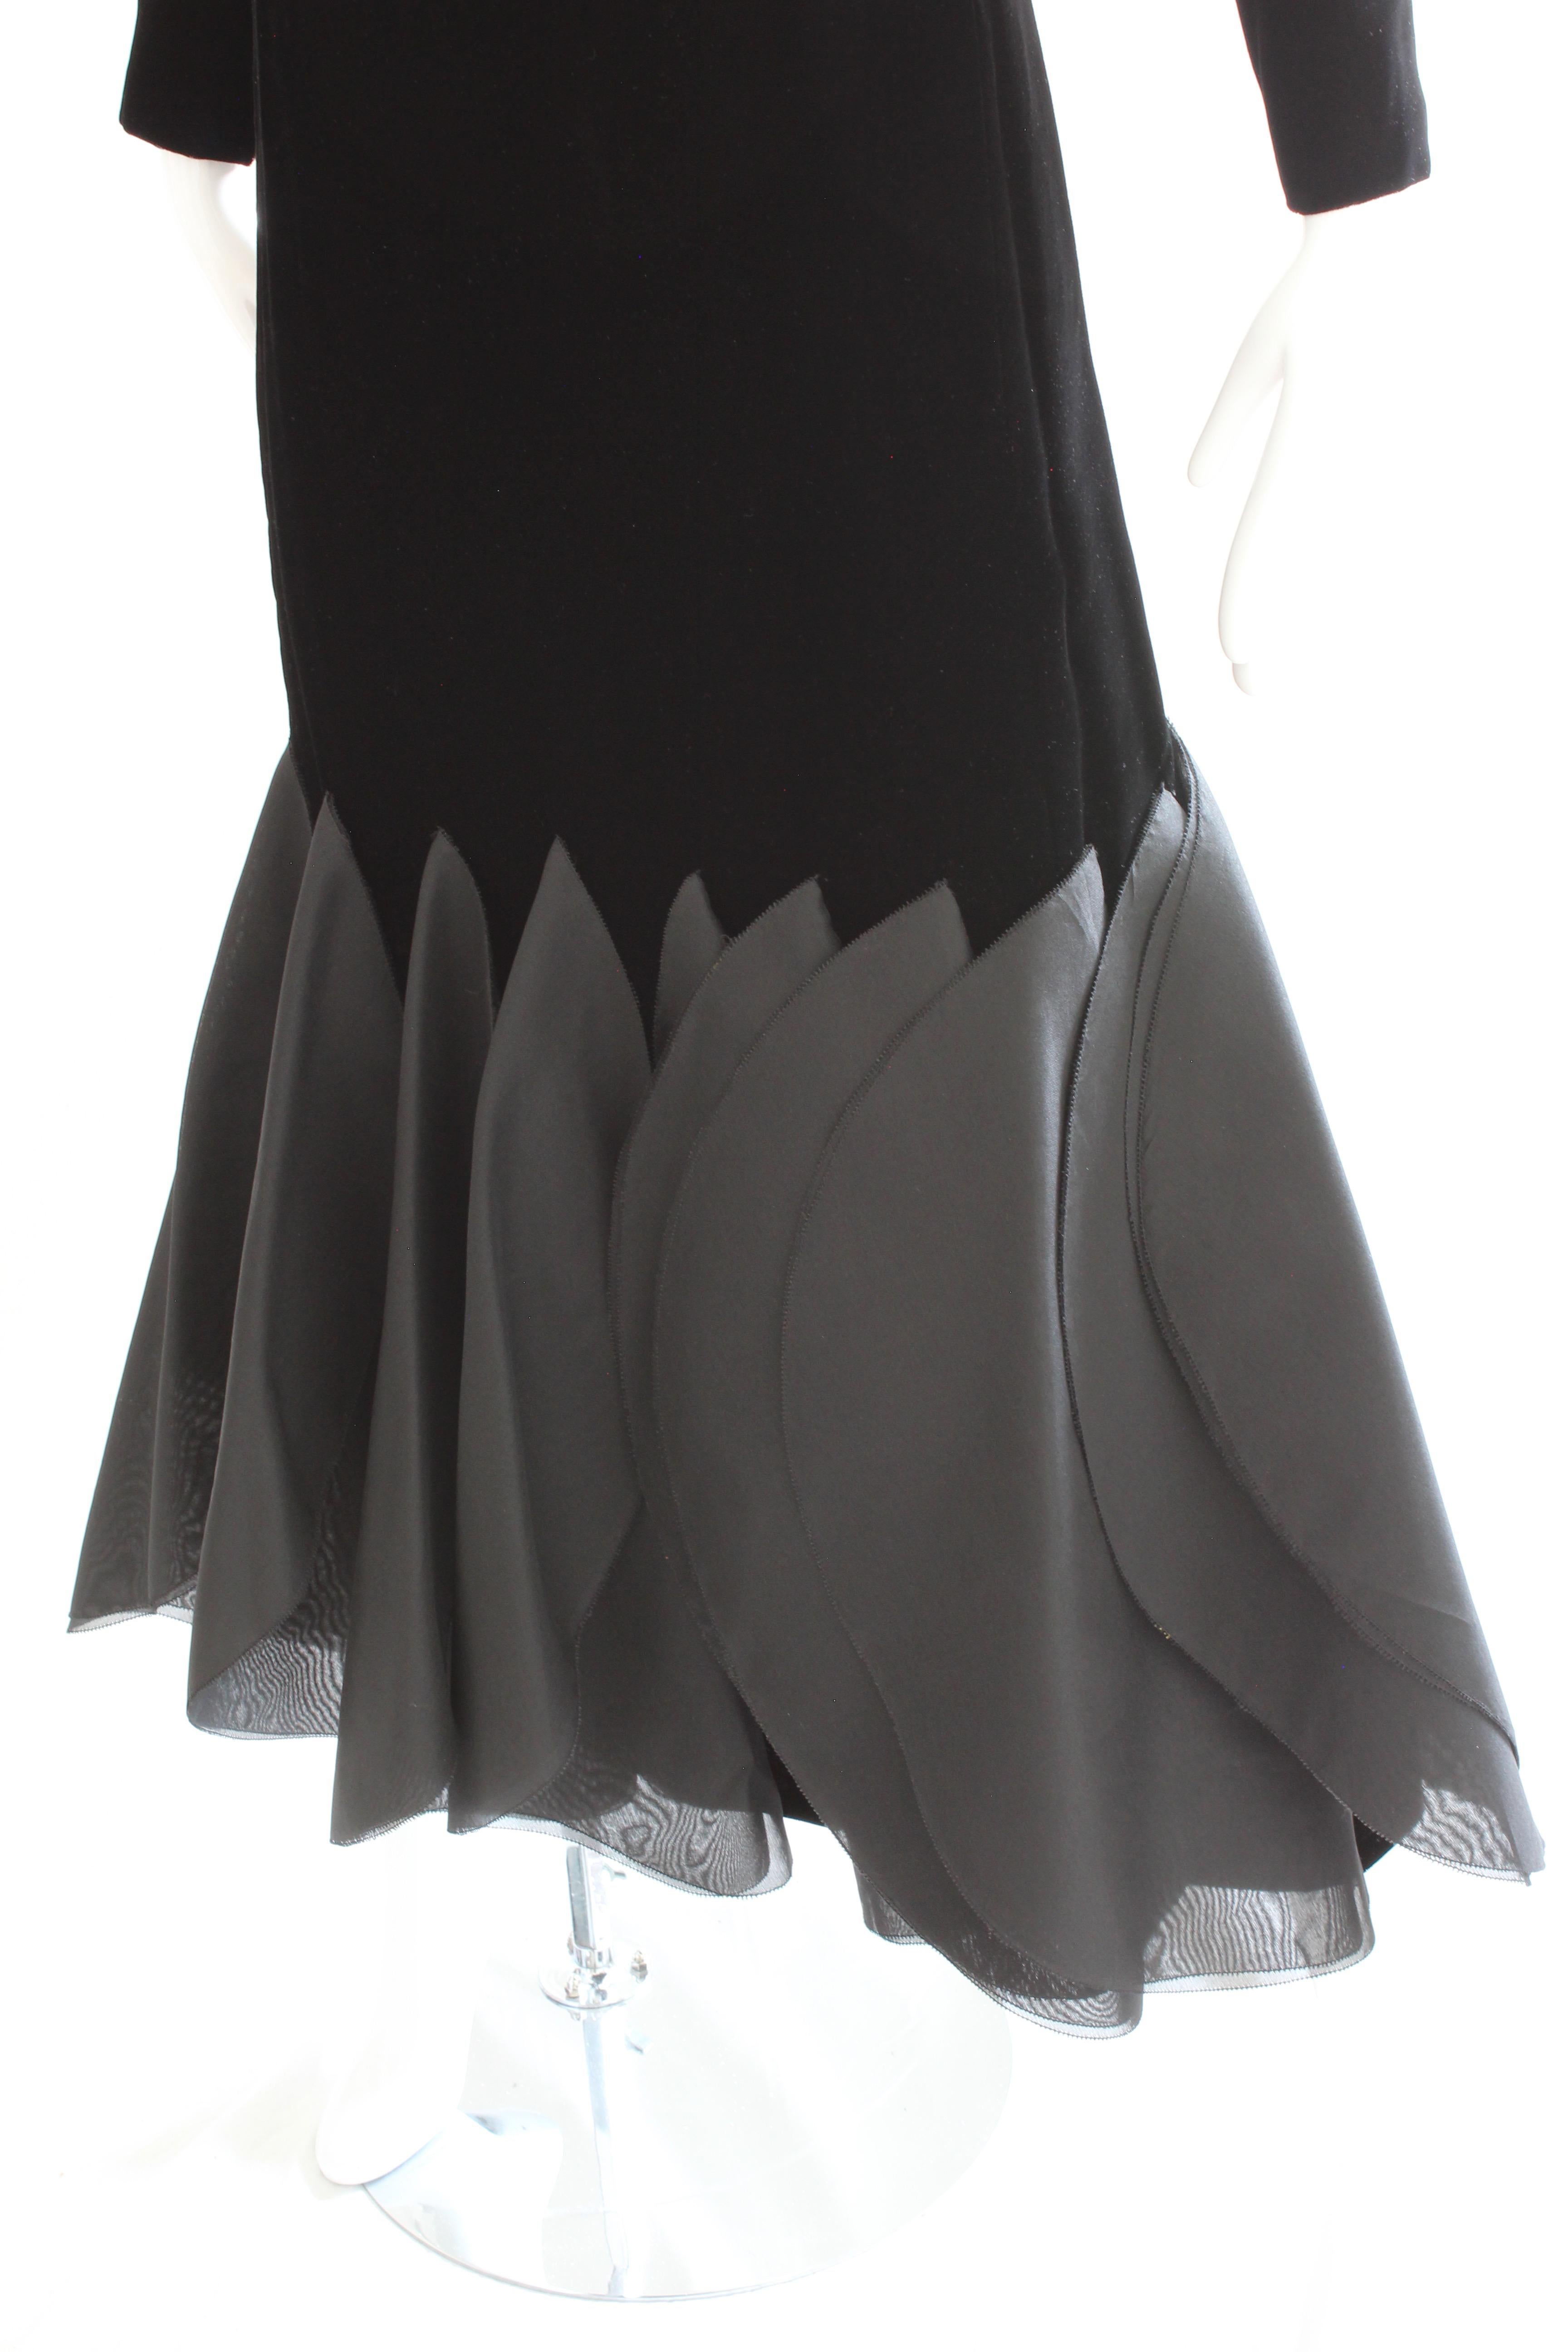 Women's Pierre Cardin Evening Gown Panel Hem Rocket Dress Space Age & Futurism 1969 